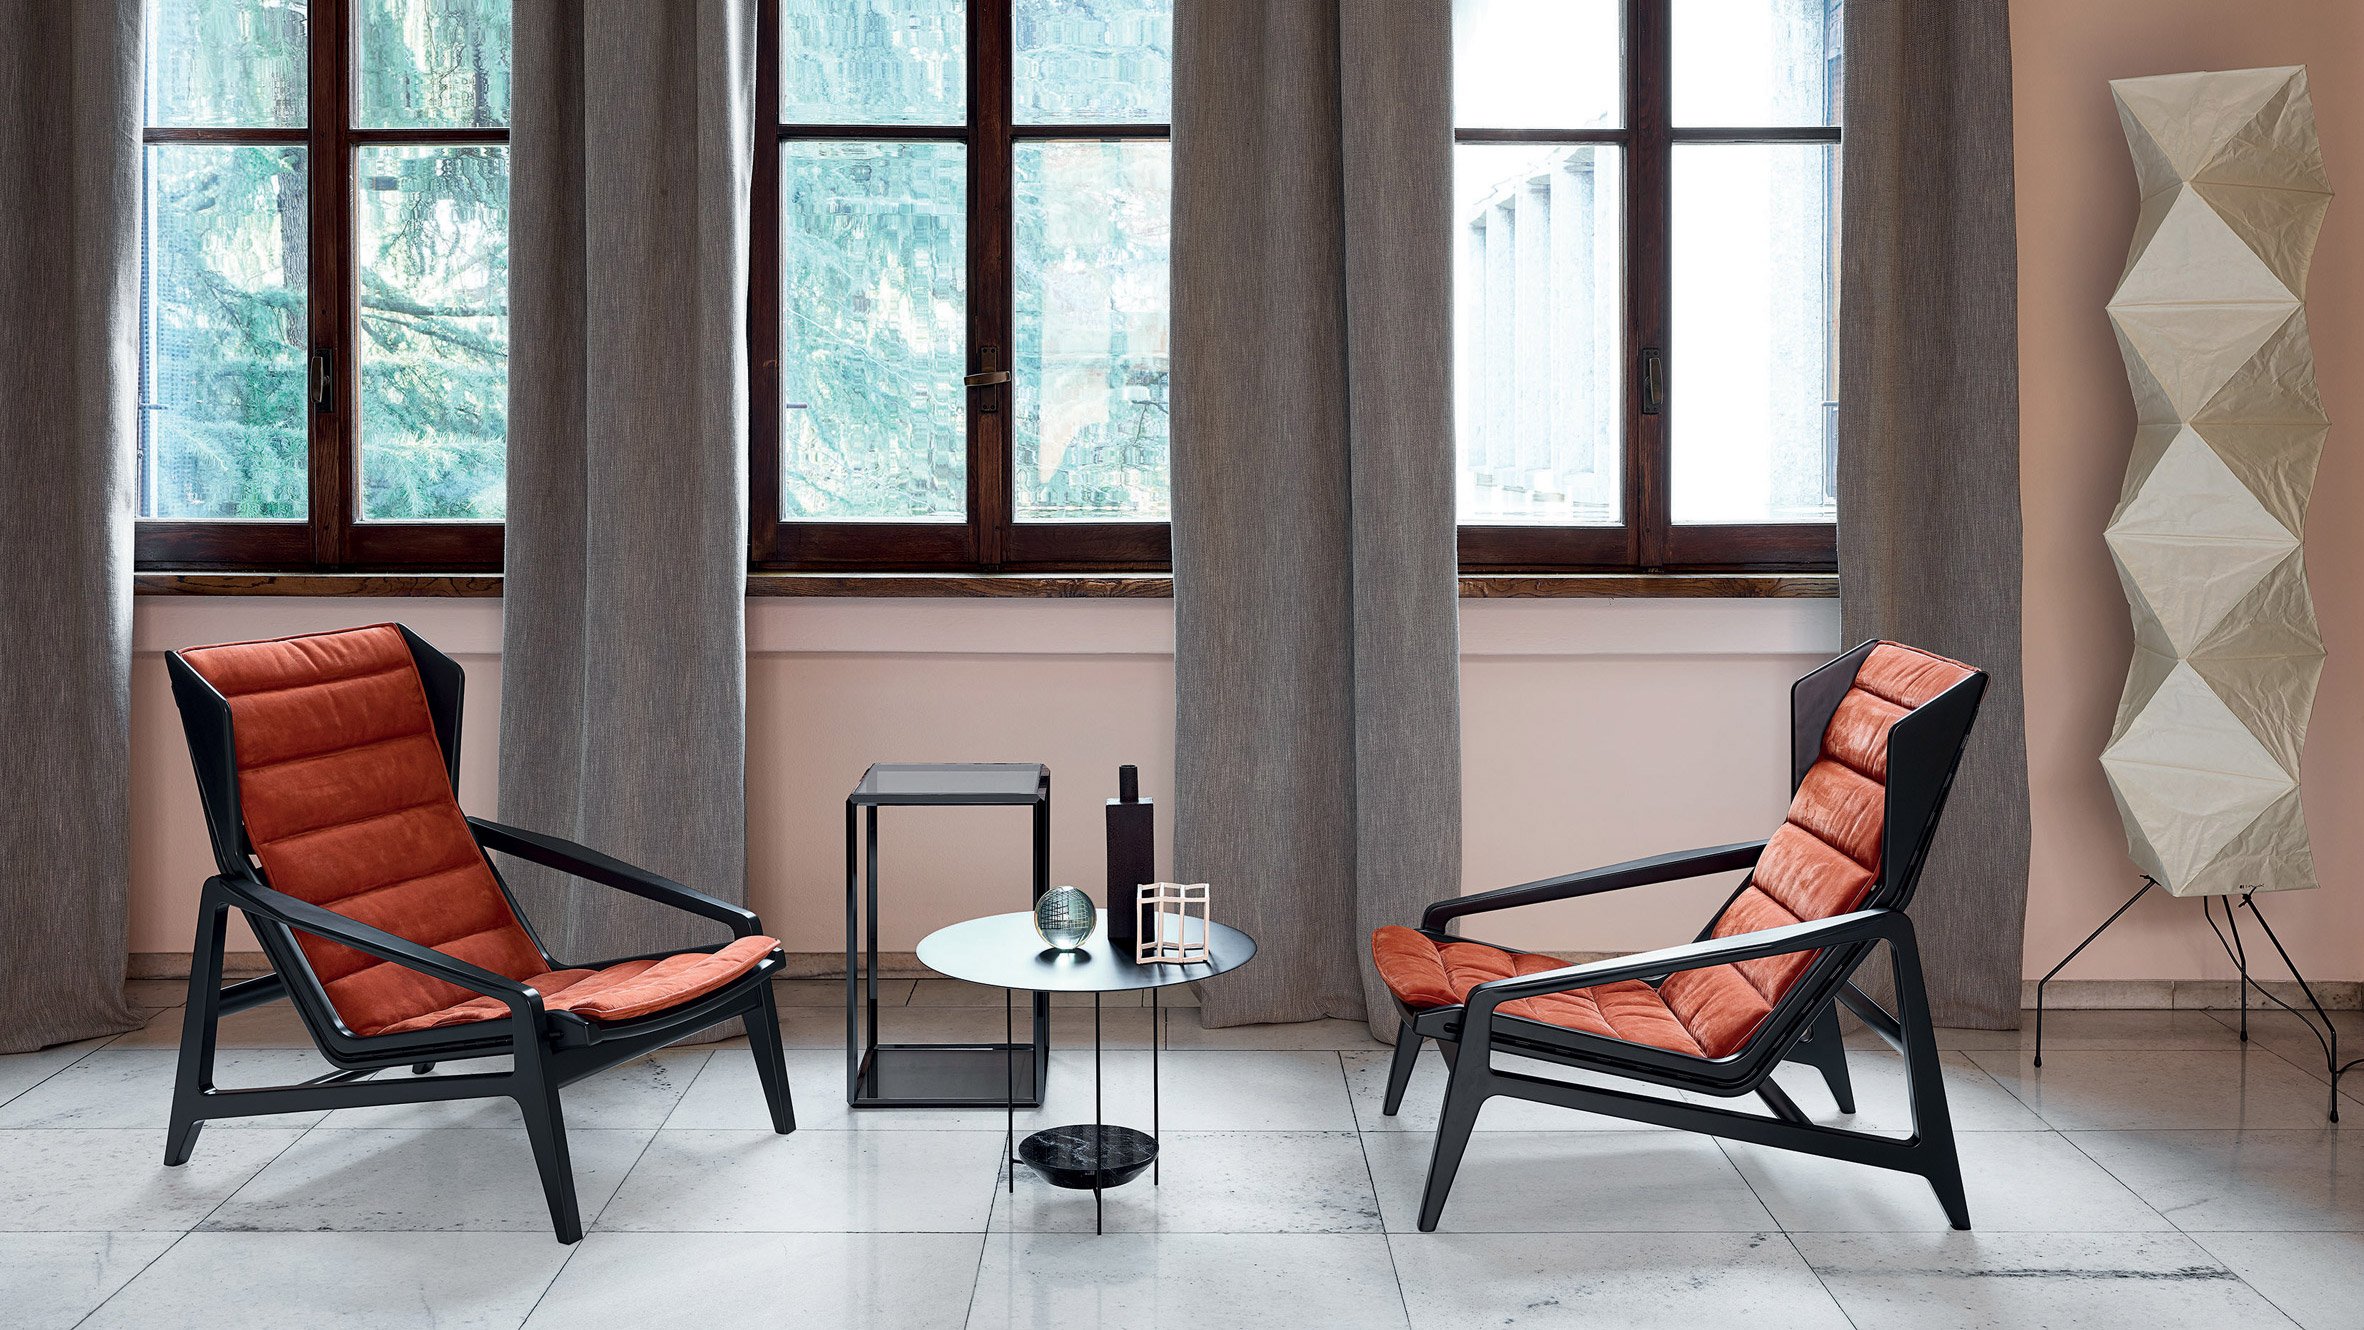 Gio Ponti Furniture Design | Online Information